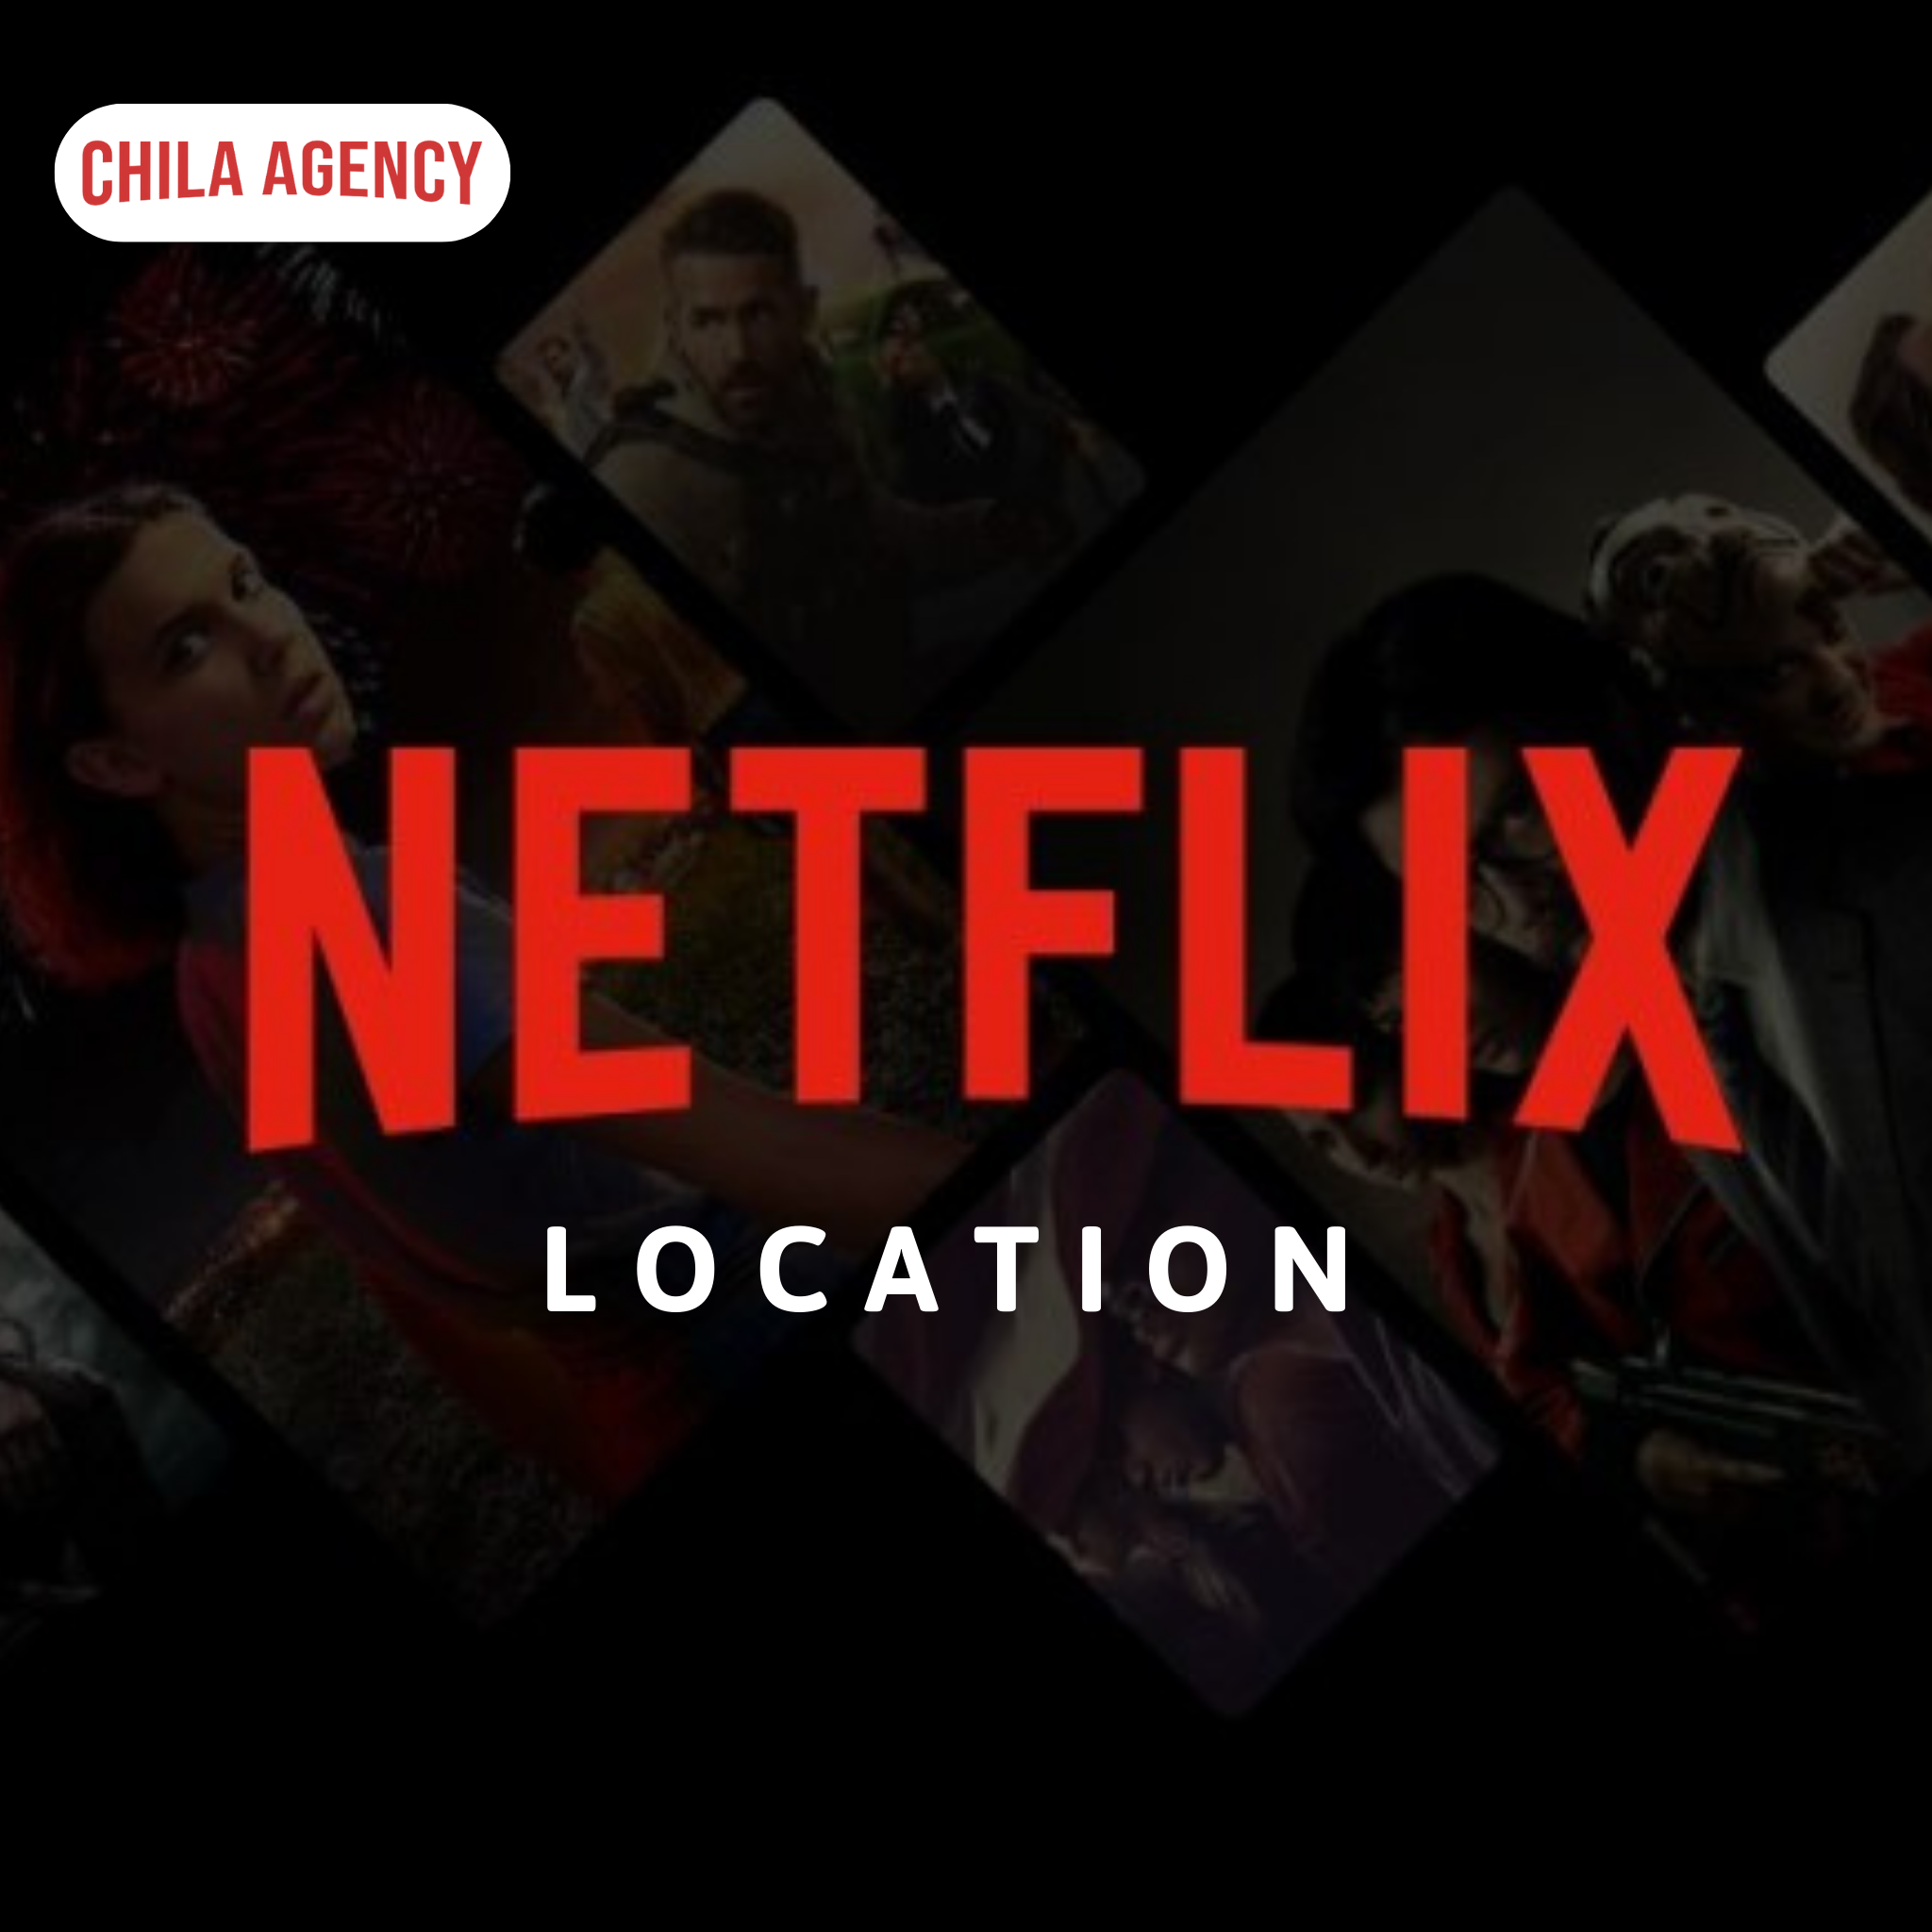  Tài khoản Netflix Location 01 tháng 